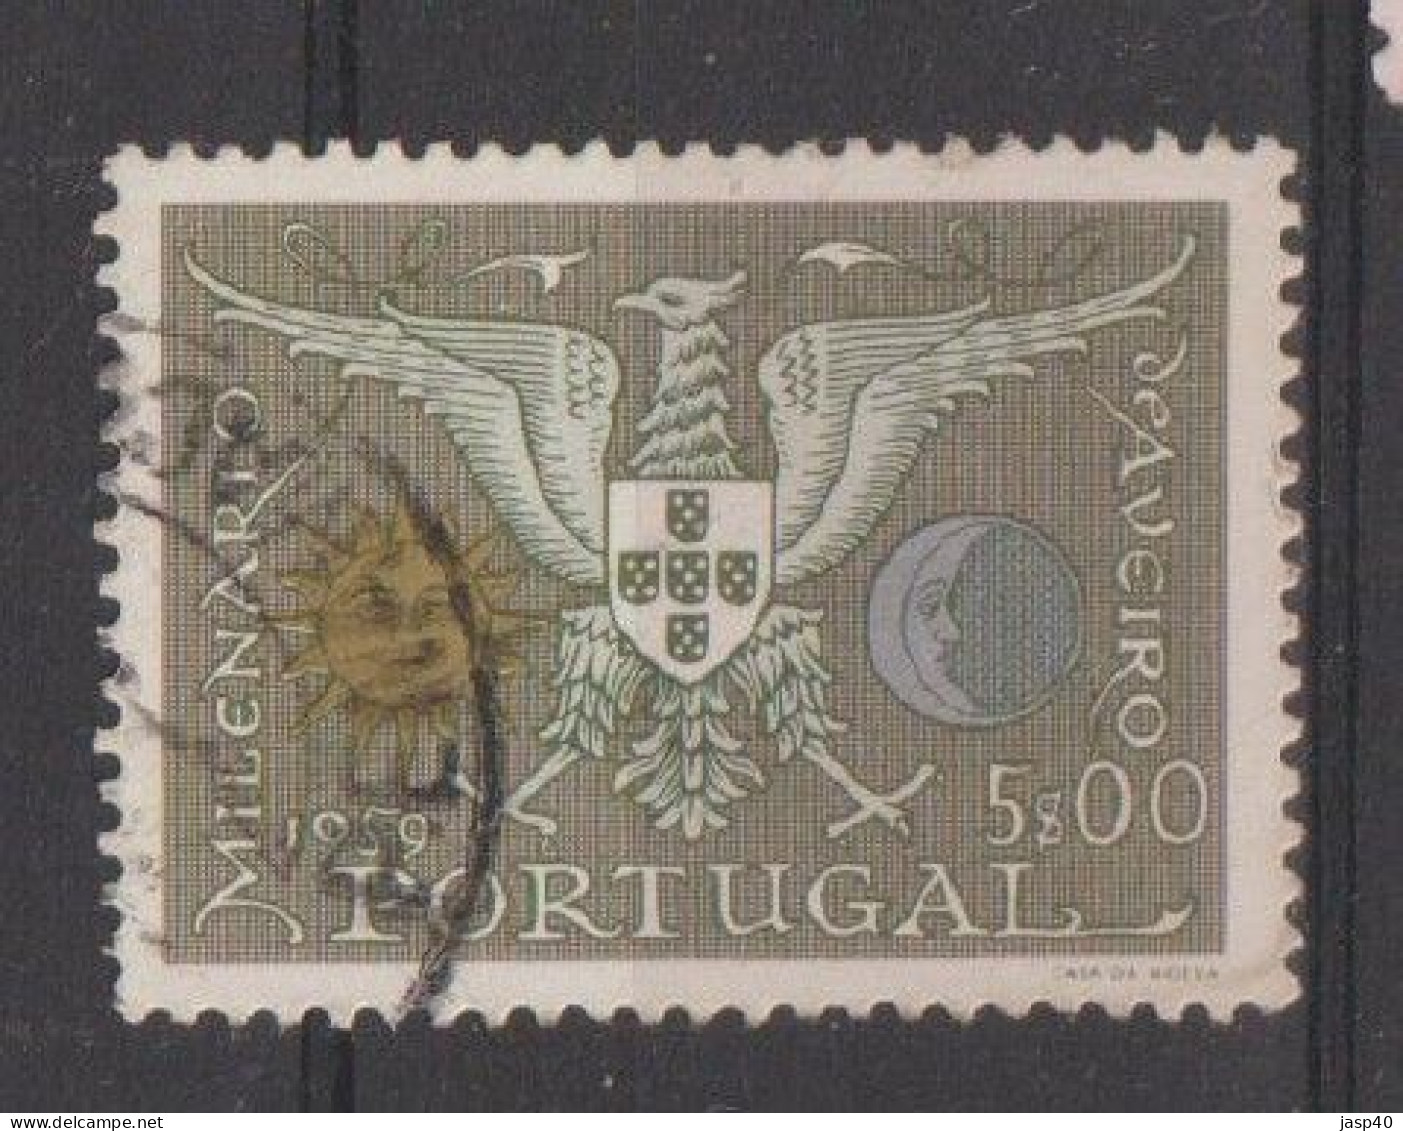 PORTUGAL 848 - POSTMARKS OF PORTUGAL - PENAMACOR - Gebruikt